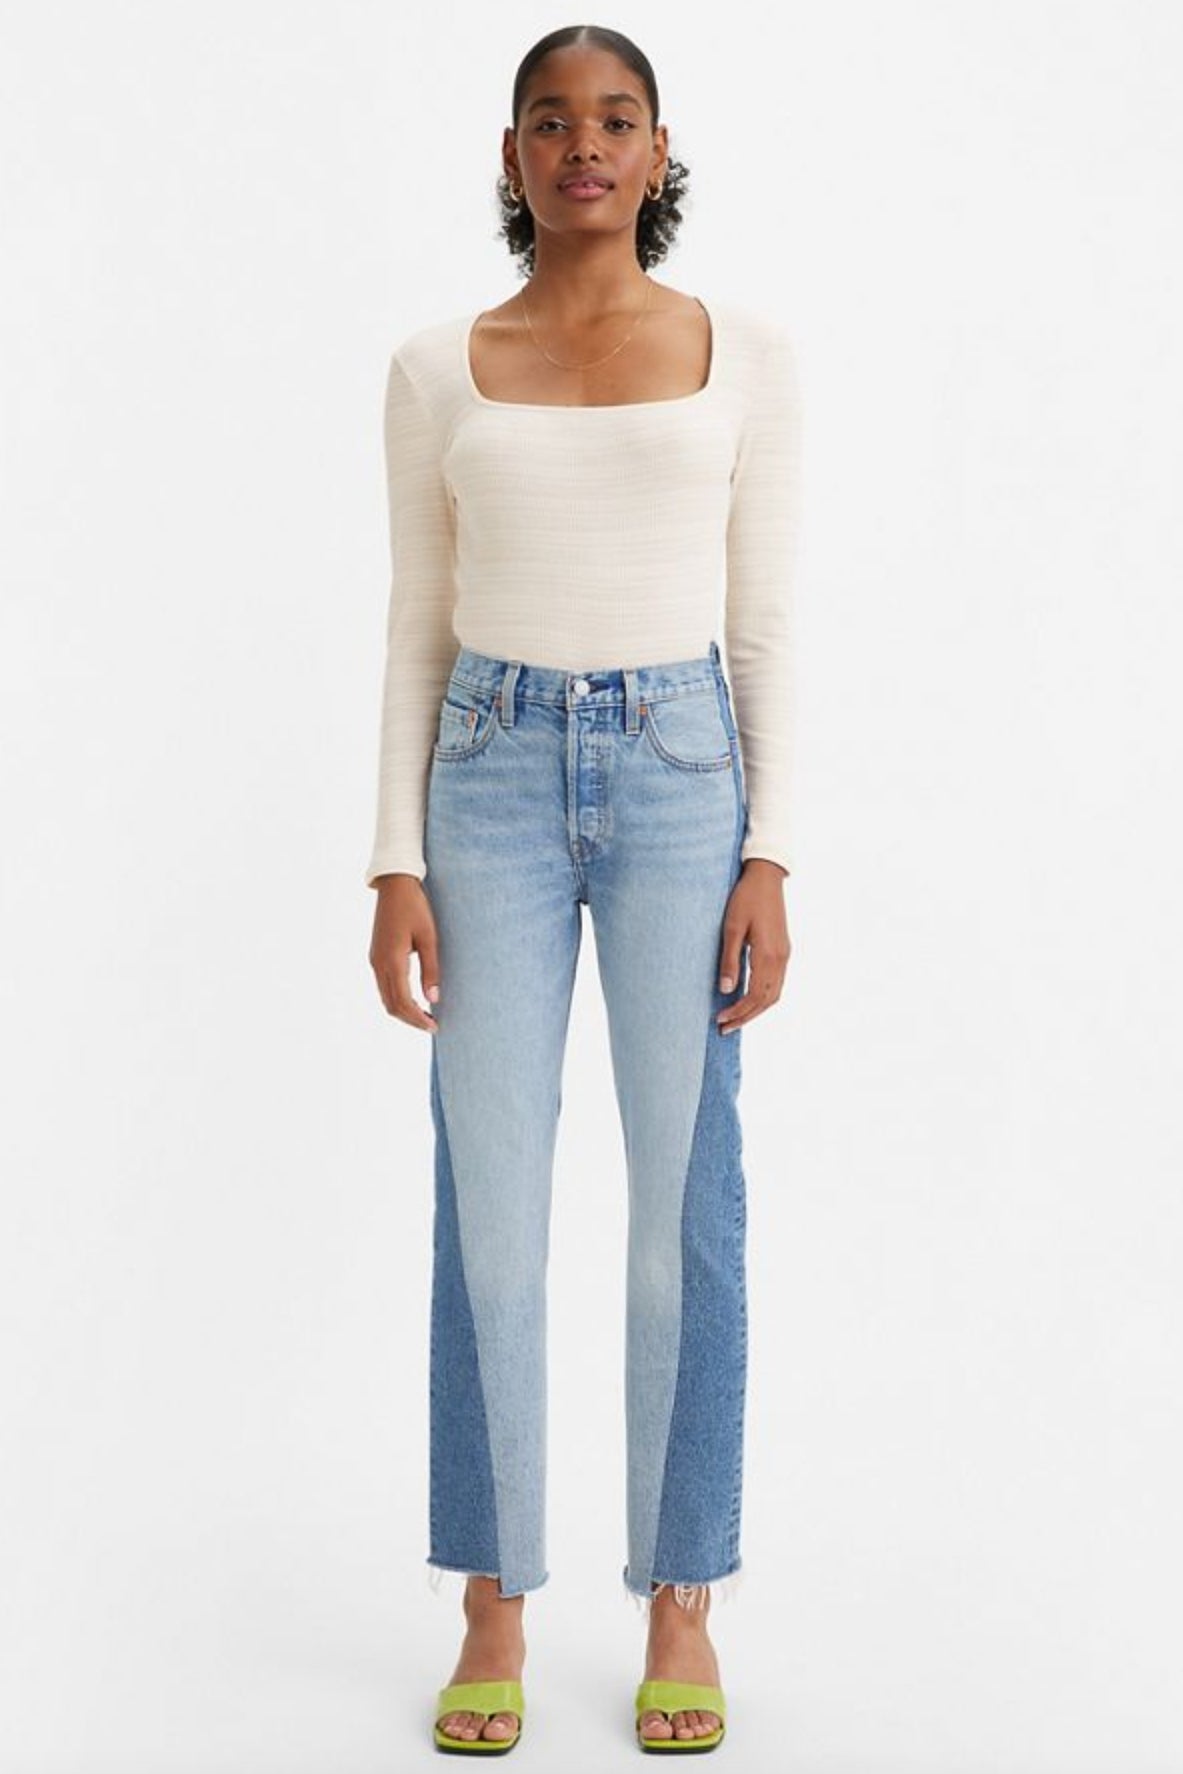 Levi's 501 Women's Long Bottom Jeans